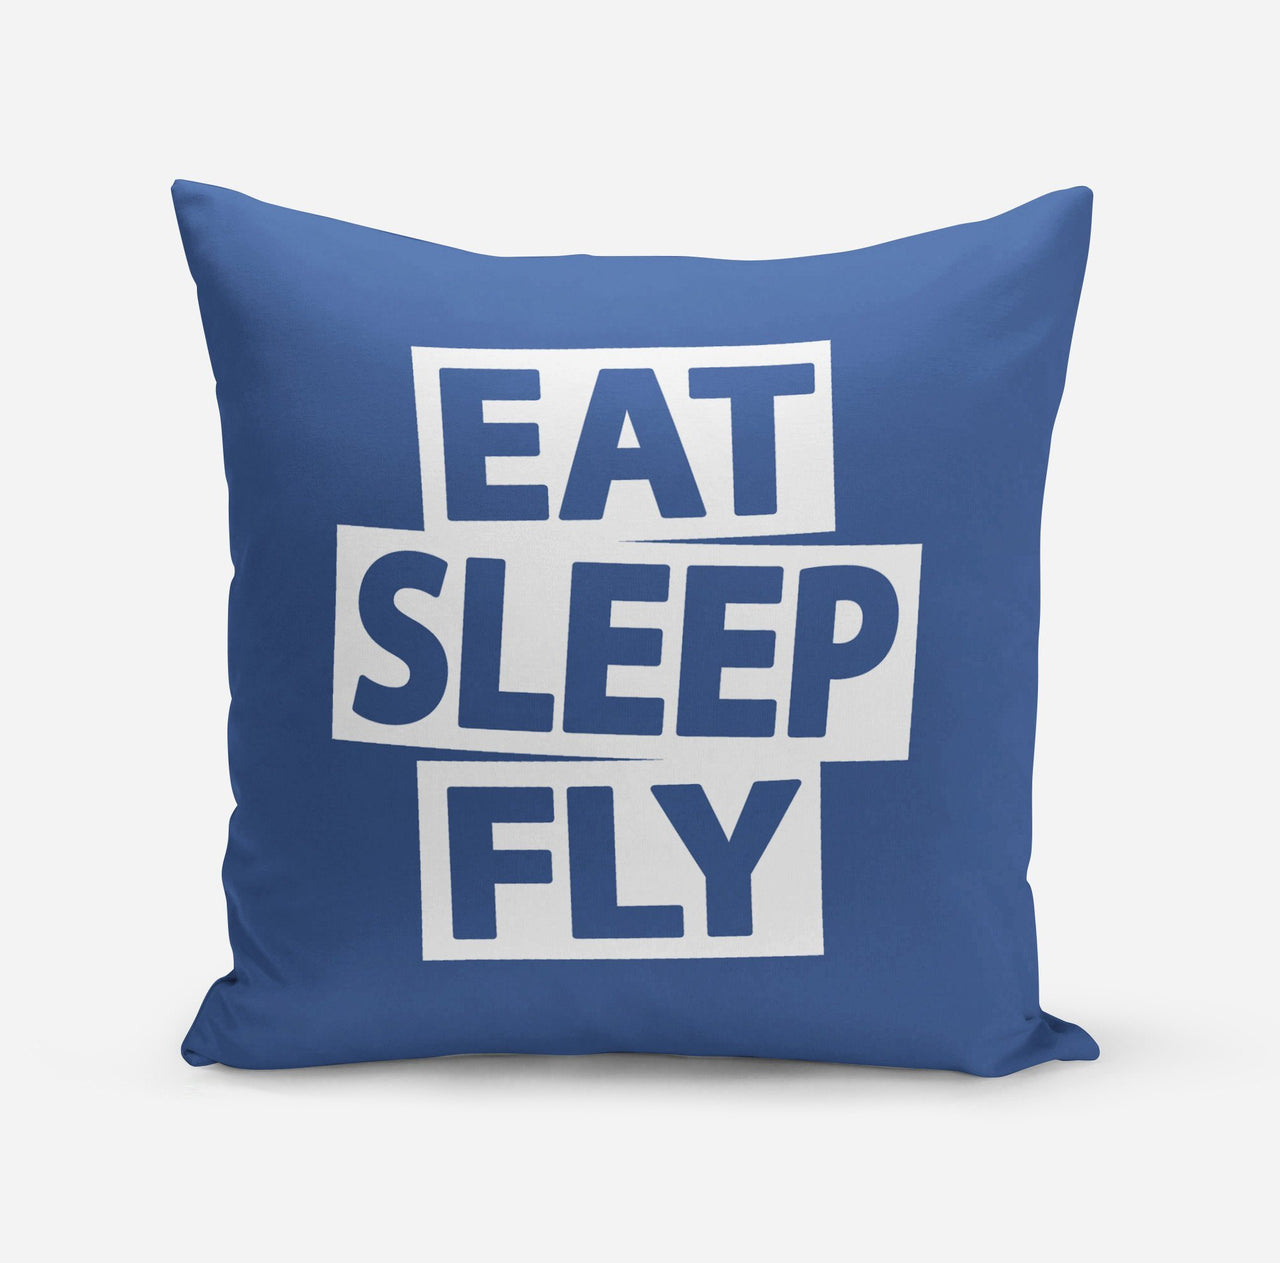 Eat Sleep Fly Pillows Pilot Eyes Store Blue 55x55cm 